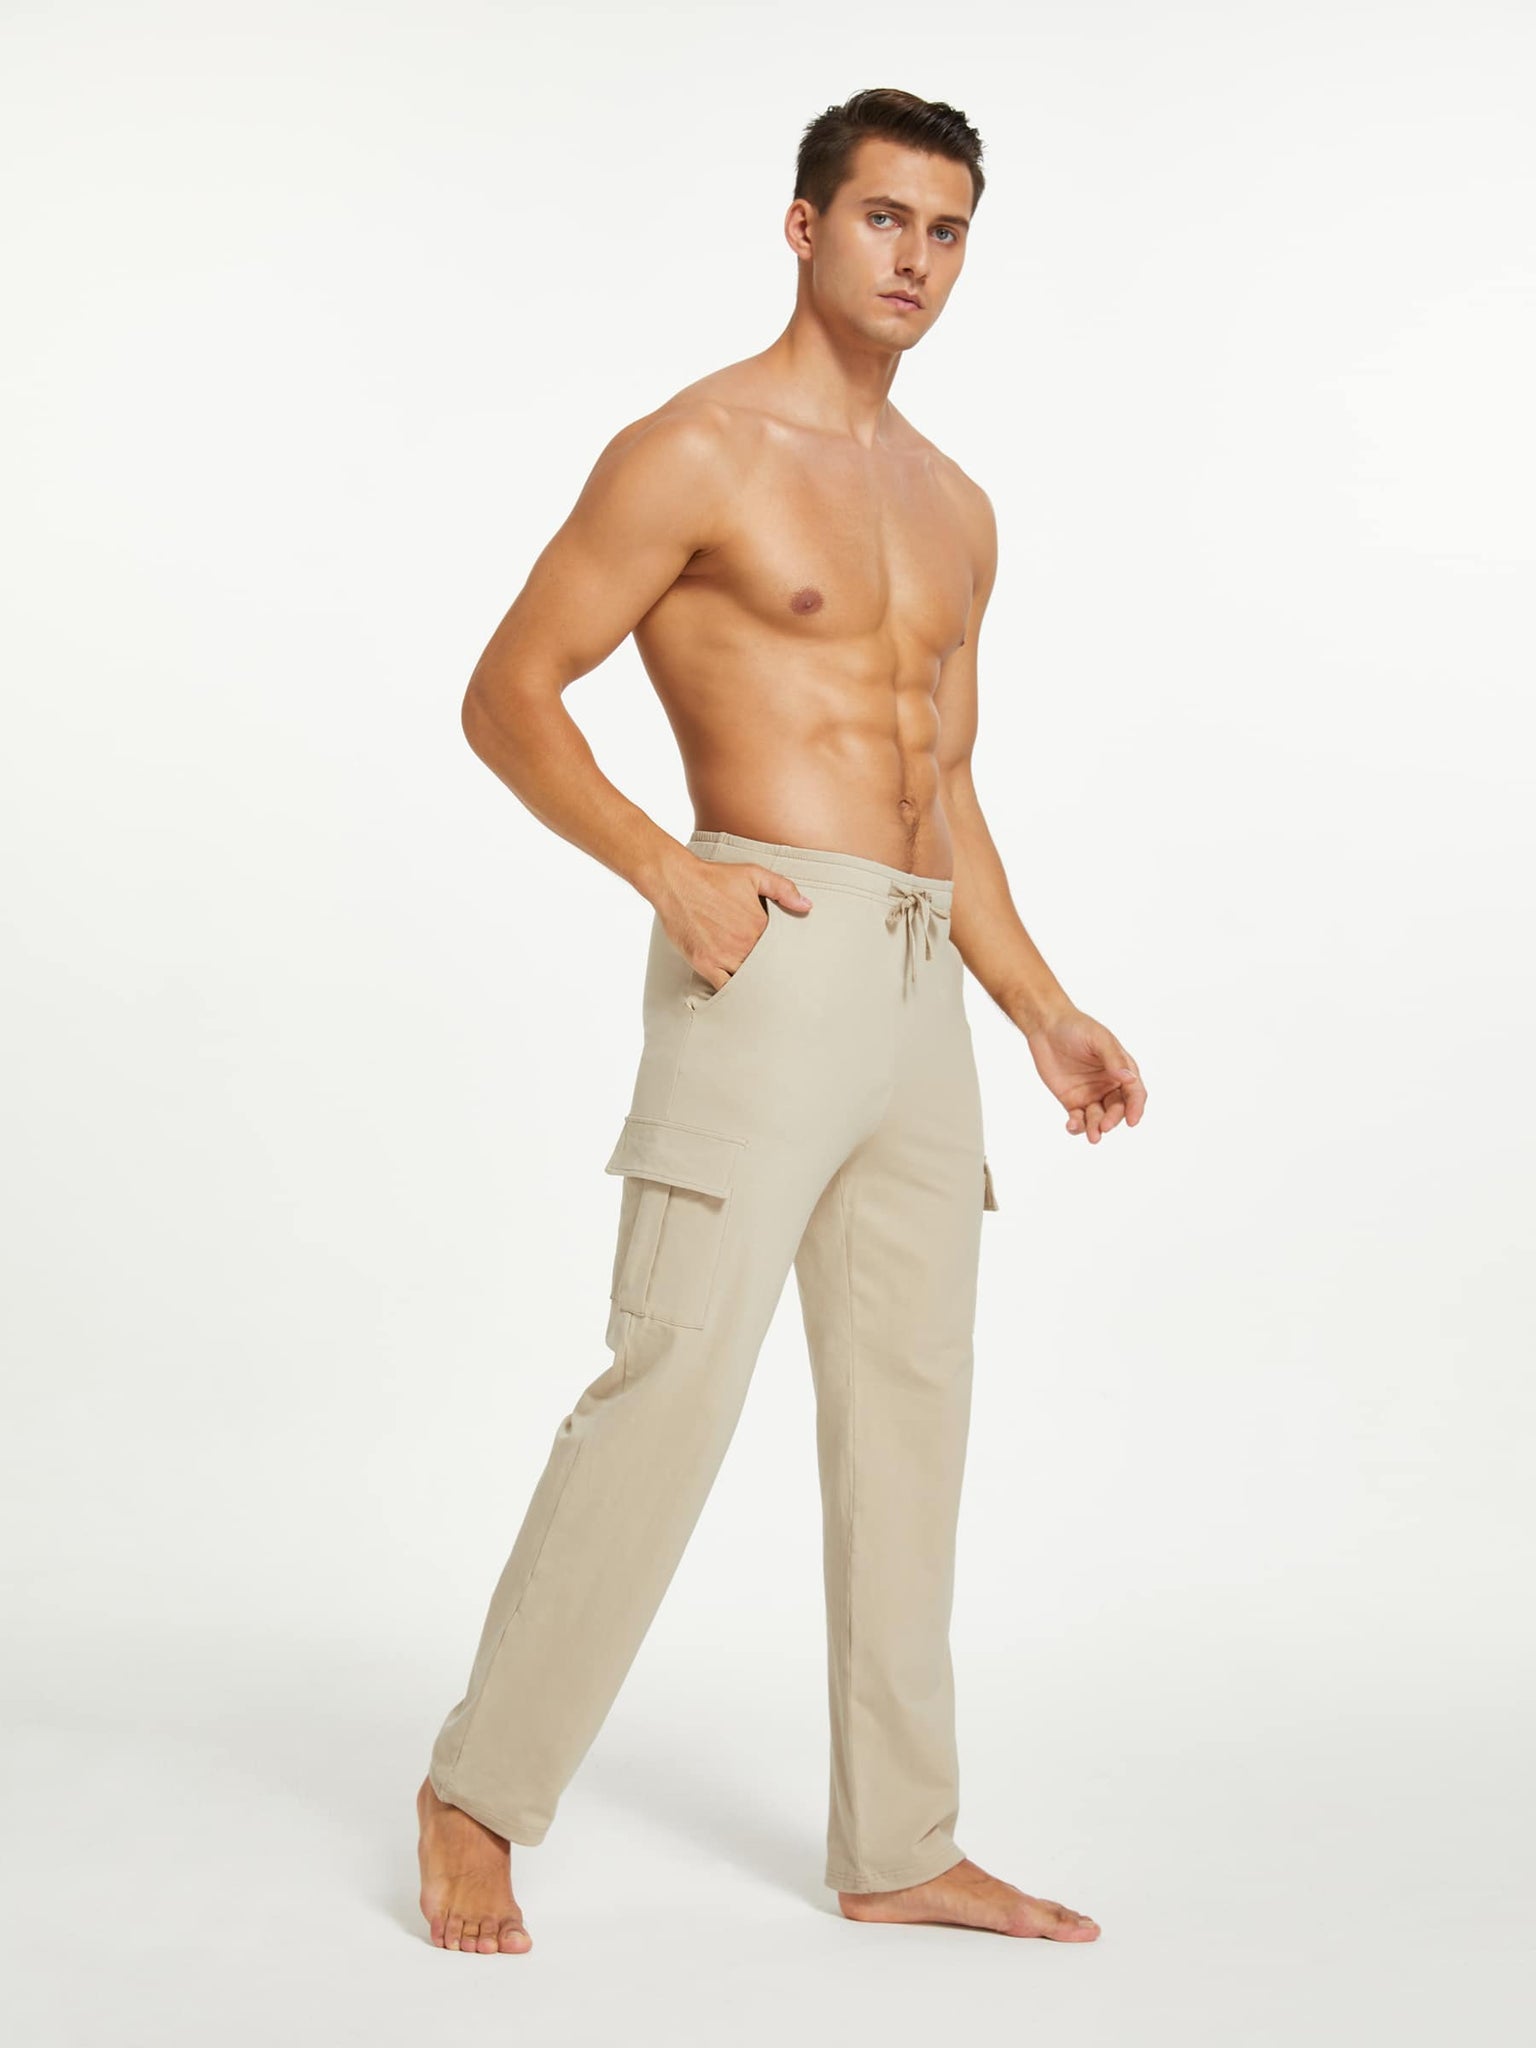 Willit Men's Cotton Yoga Sweatpants Lounge Pants